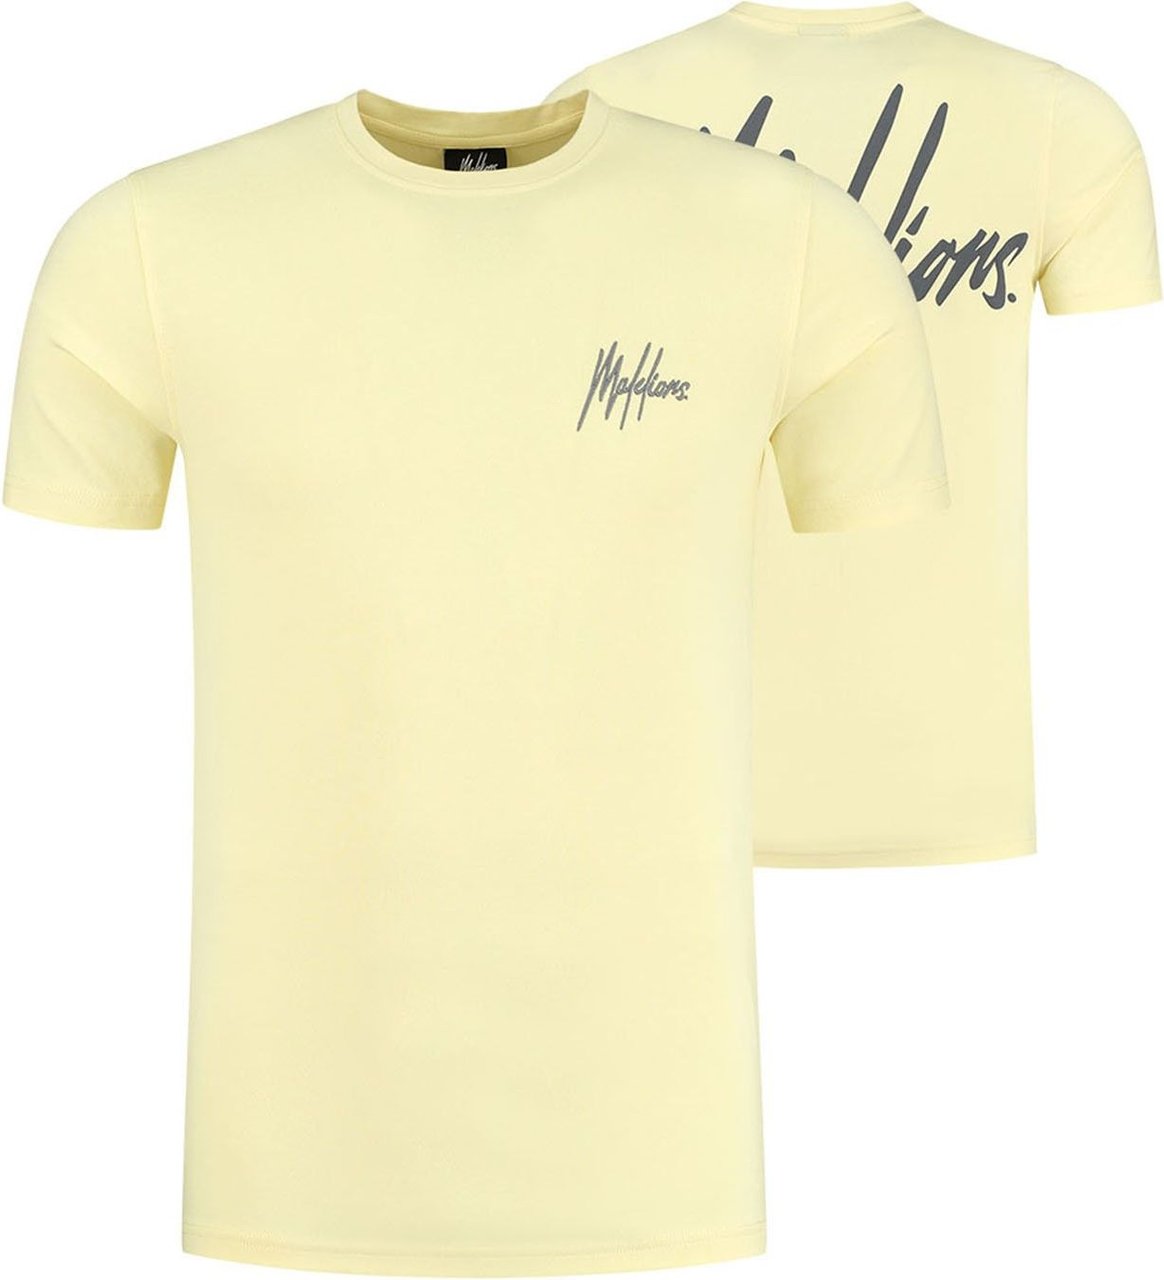 Malelions Men Puff T-Shirt - Yellow/Matt Grey Wit